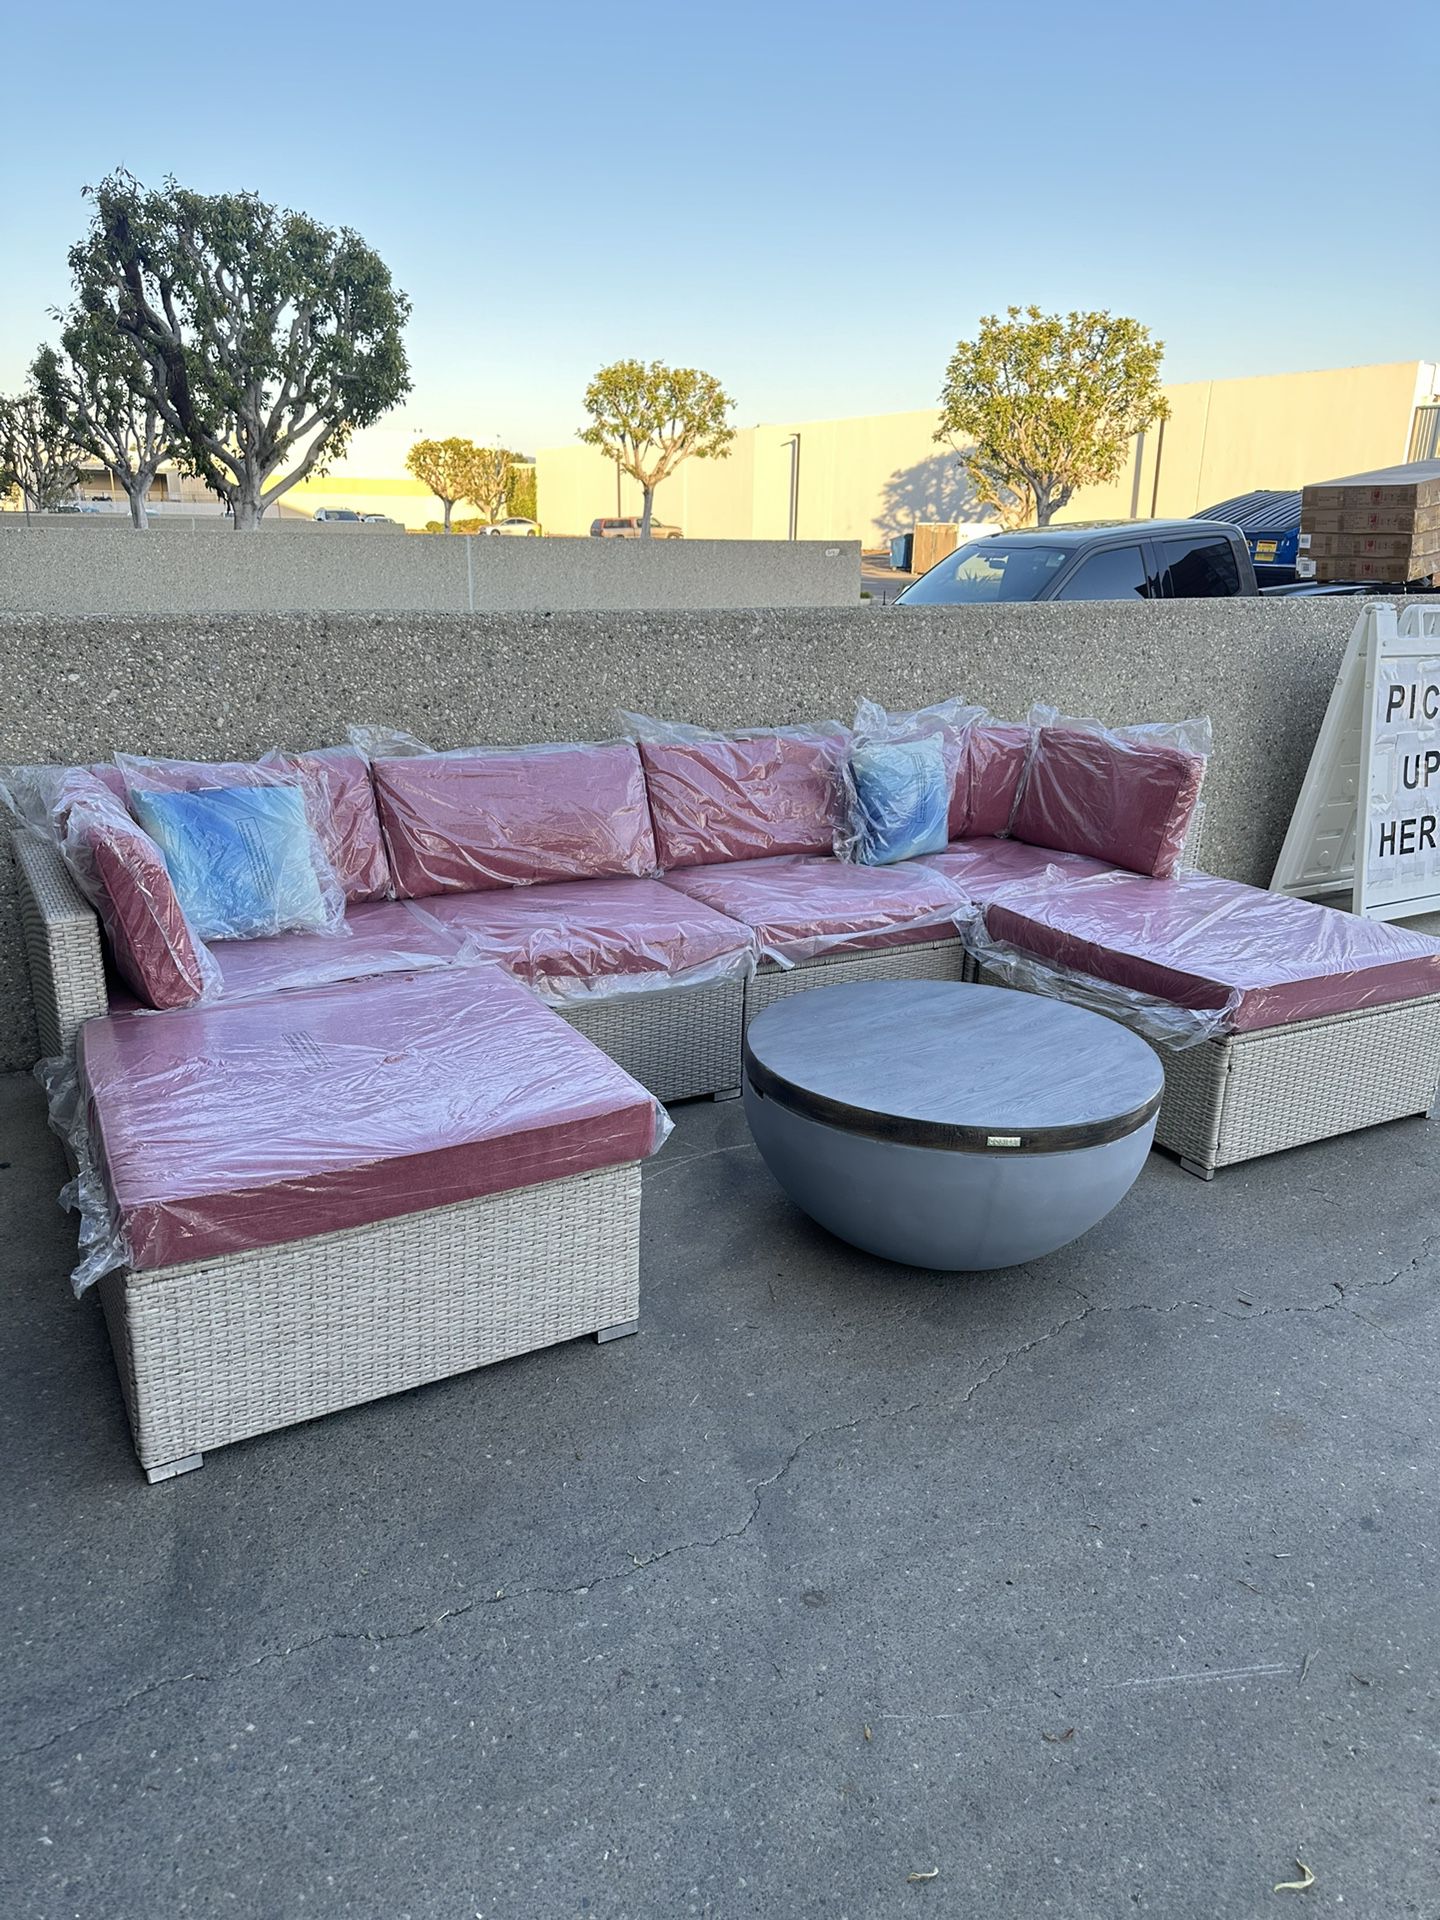 7pc Outdoor Patio Furniture Set 